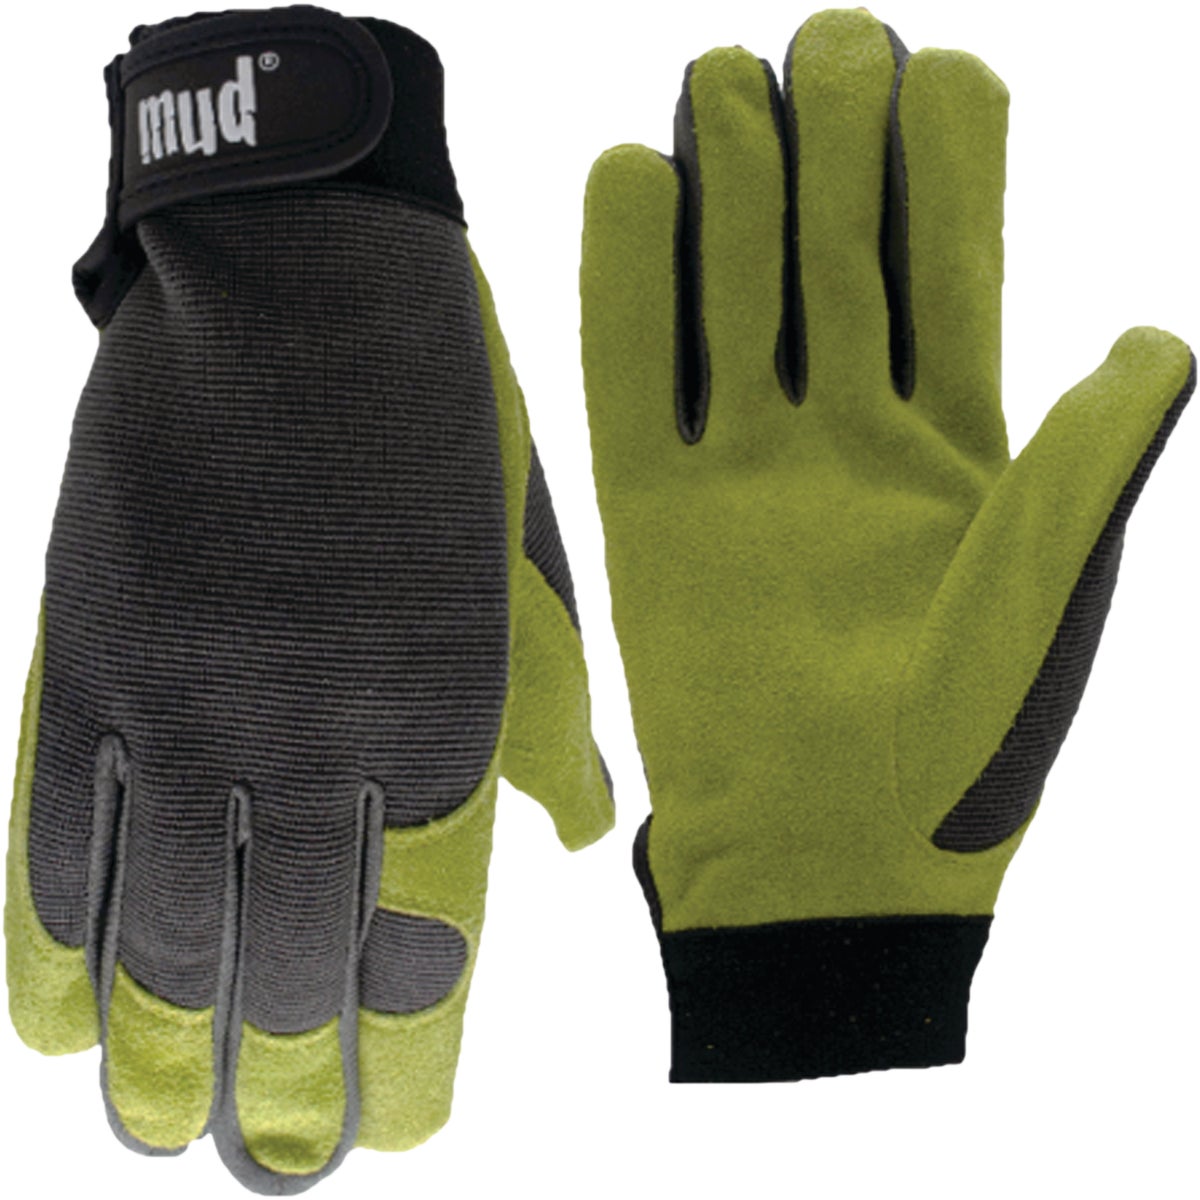 Mud Women's Medium/Large Split Leather Grass High Dexterity Garden Glove